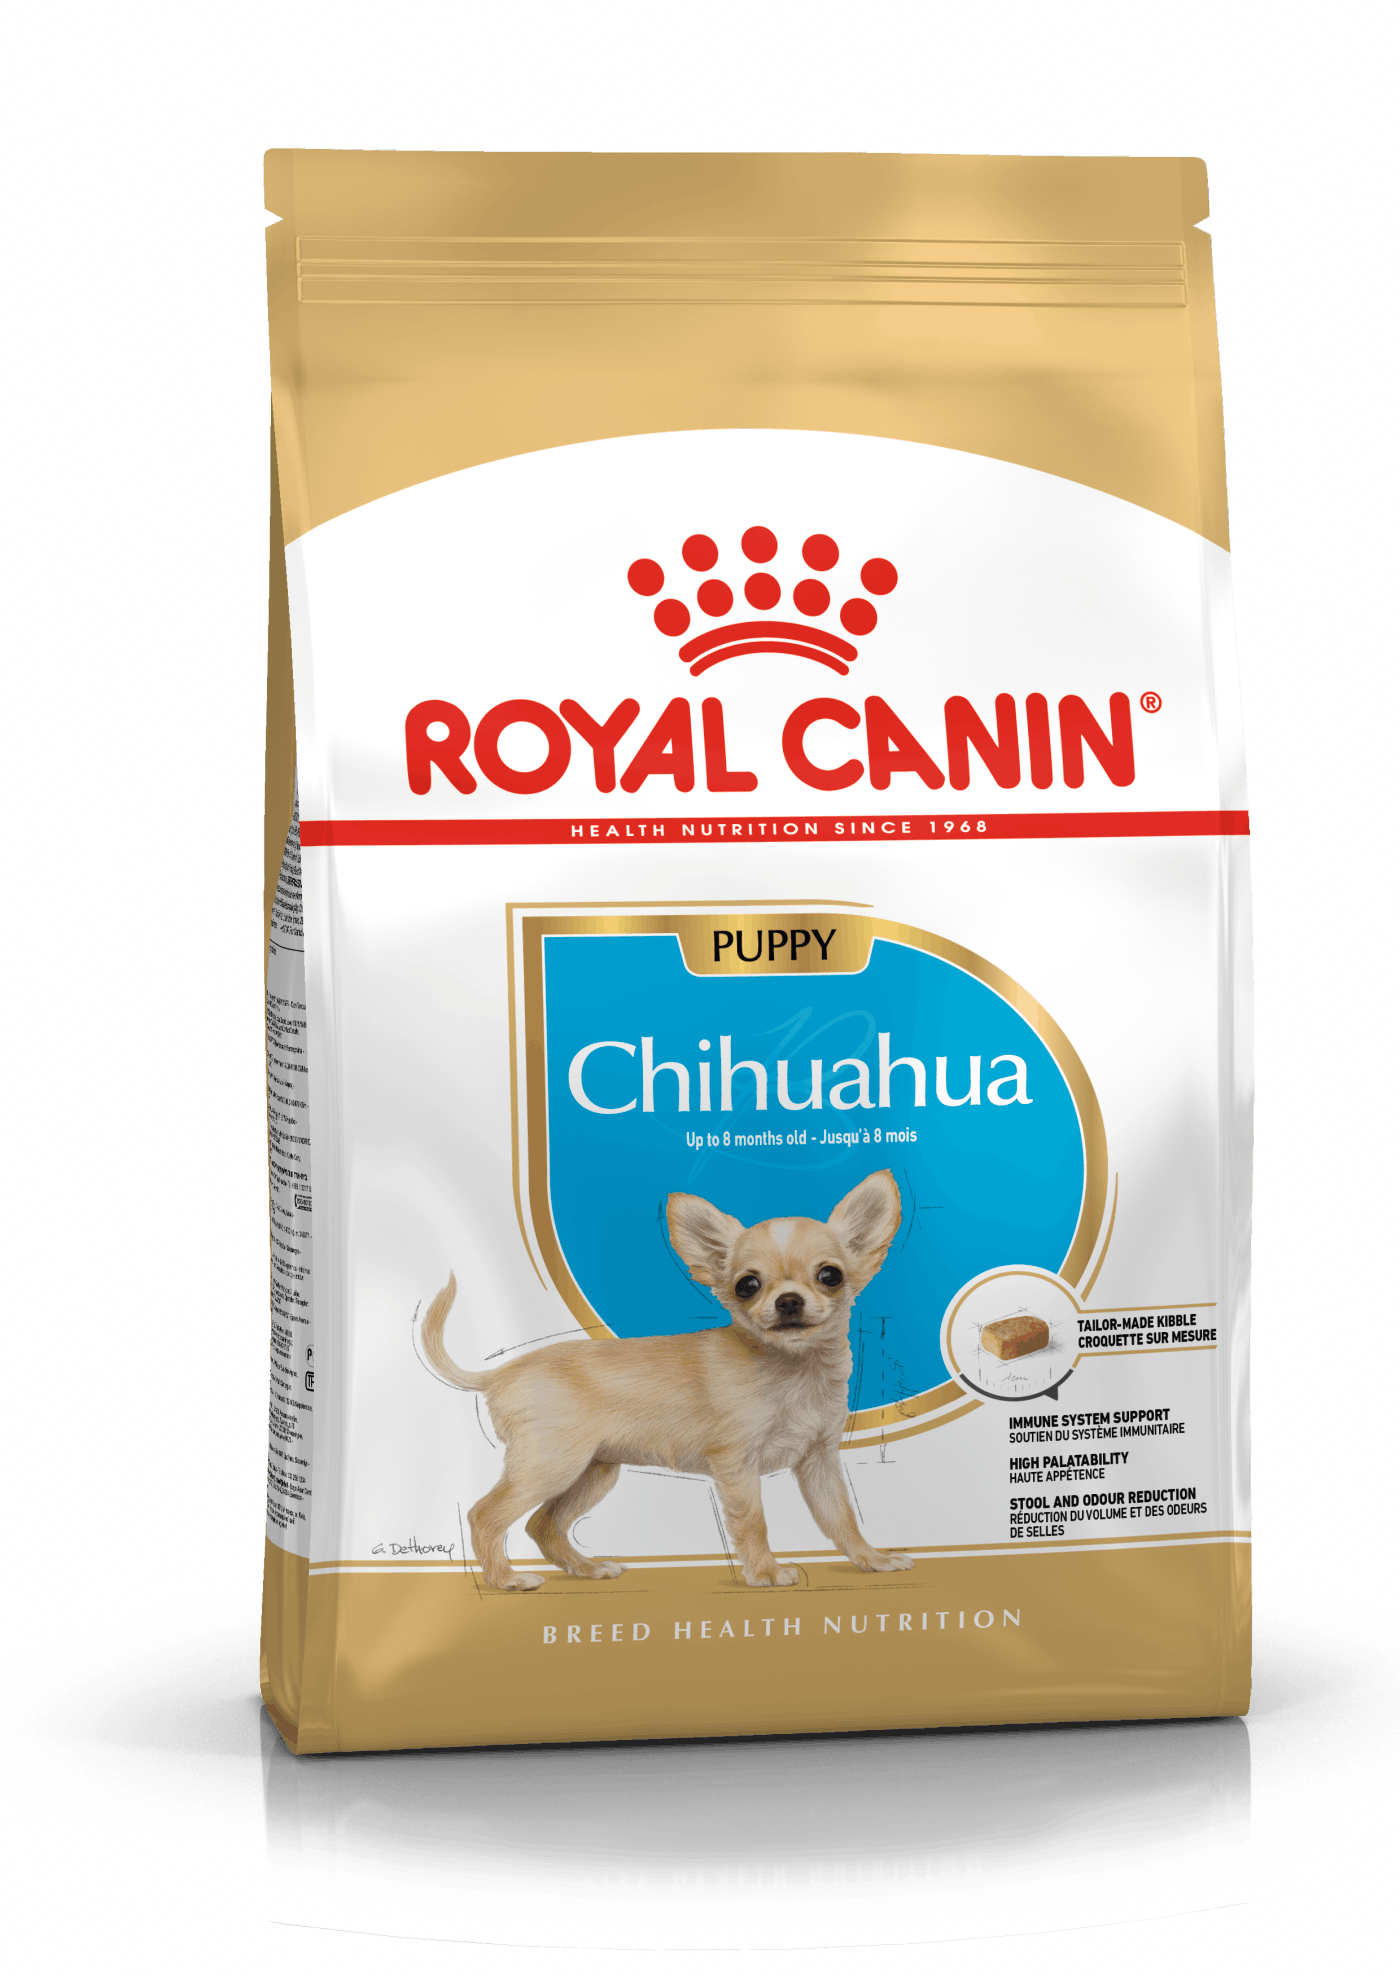 Royal Canin Chihuahua Puppy - op til 8 måneder. 1,5kg